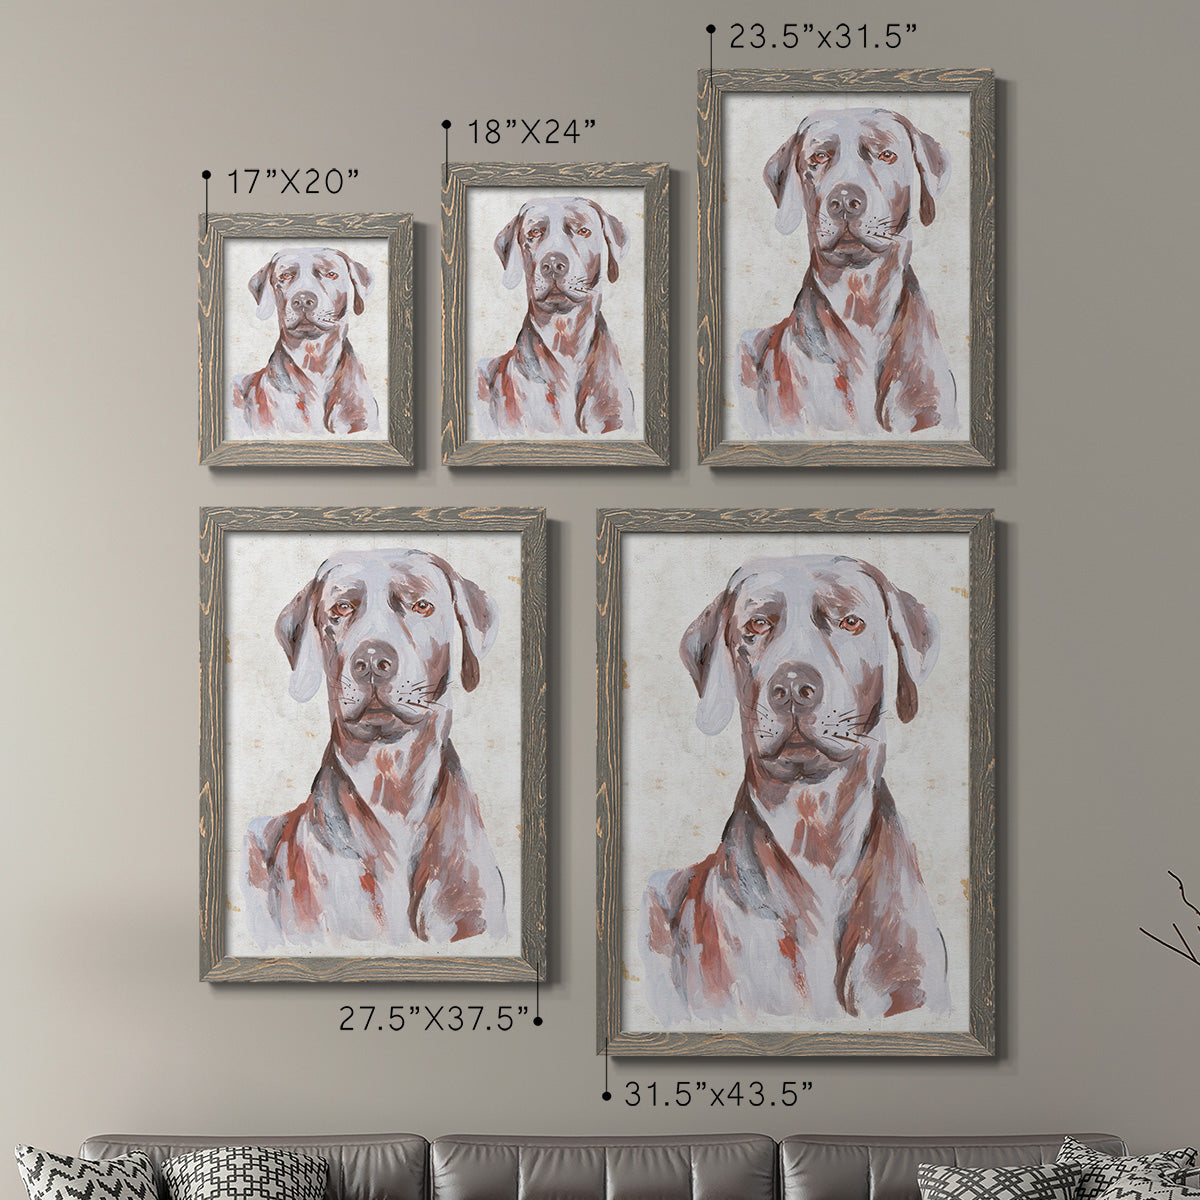 Sitting Dog I - Premium Framed Canvas 2 Piece Set - Ready to Hang